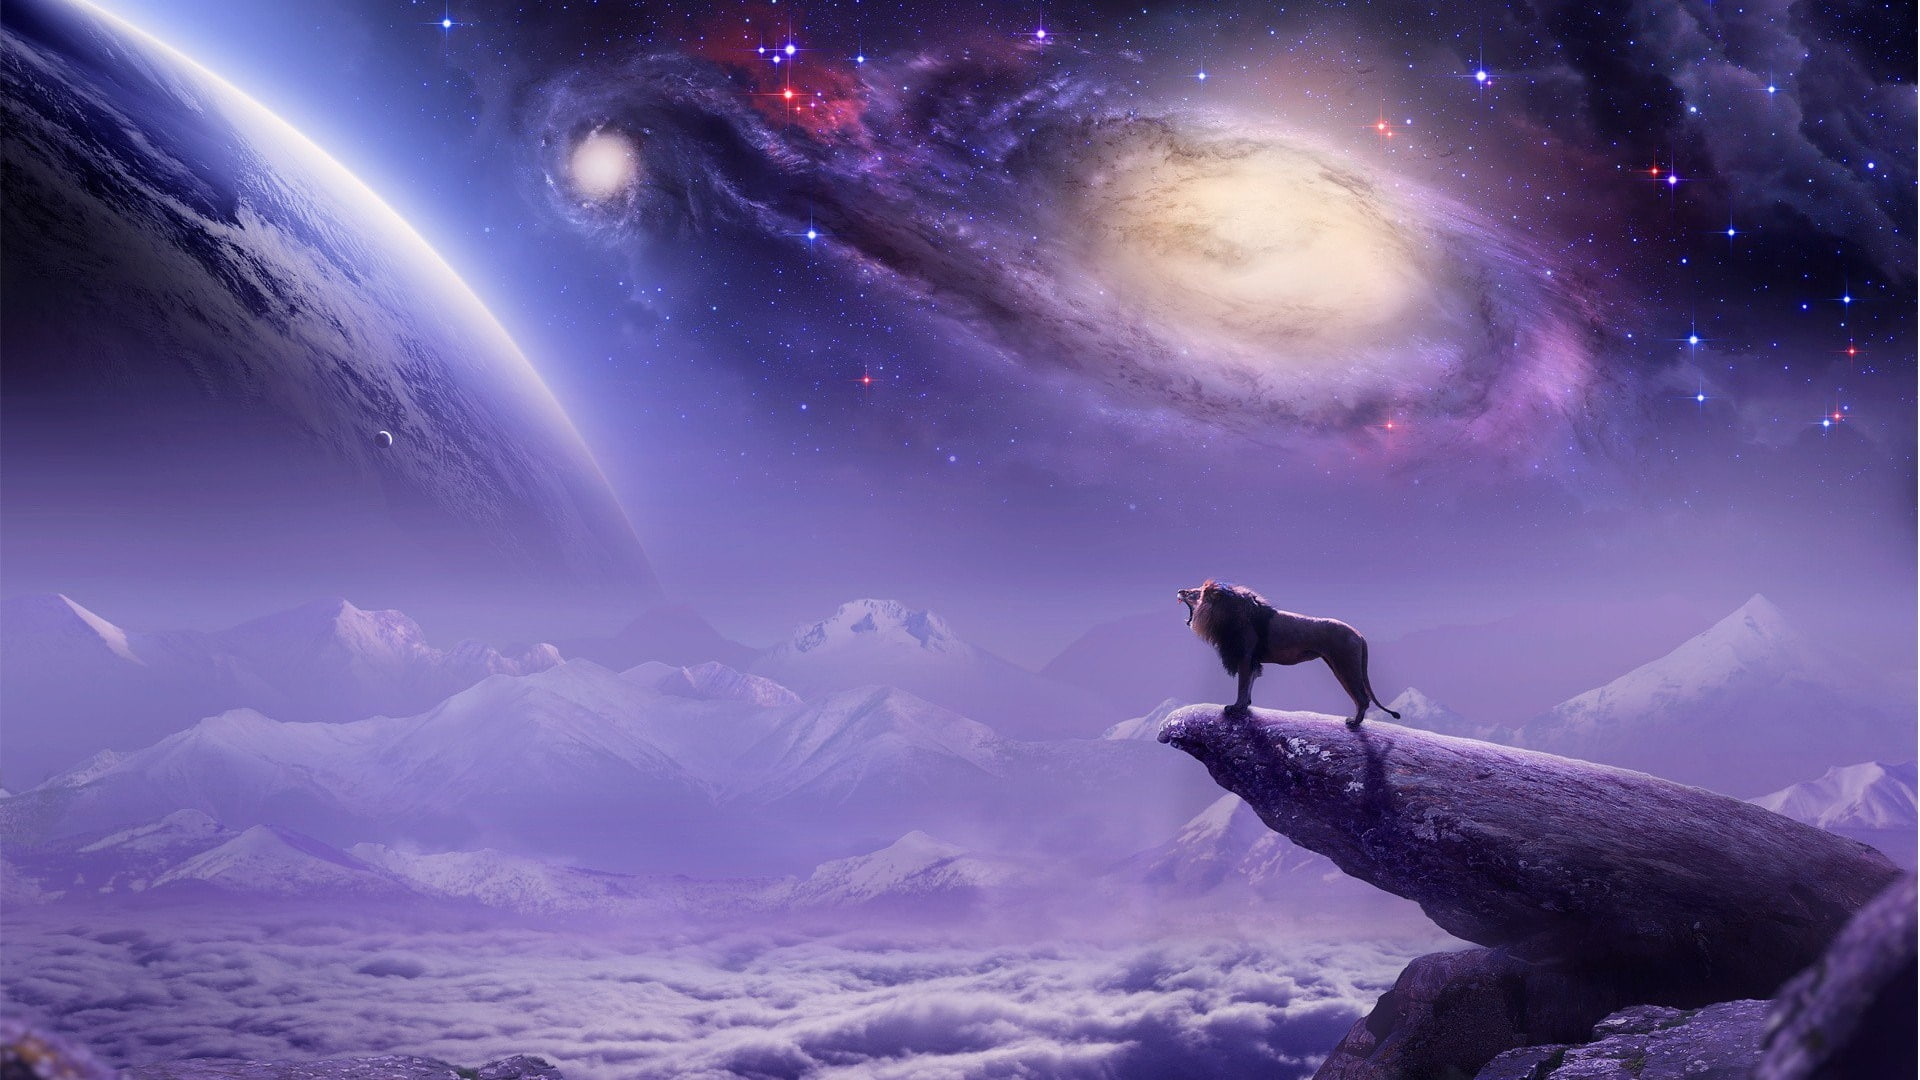 Nature wallpaper, roar, universe, space, fantasy art, lion, purple, sky